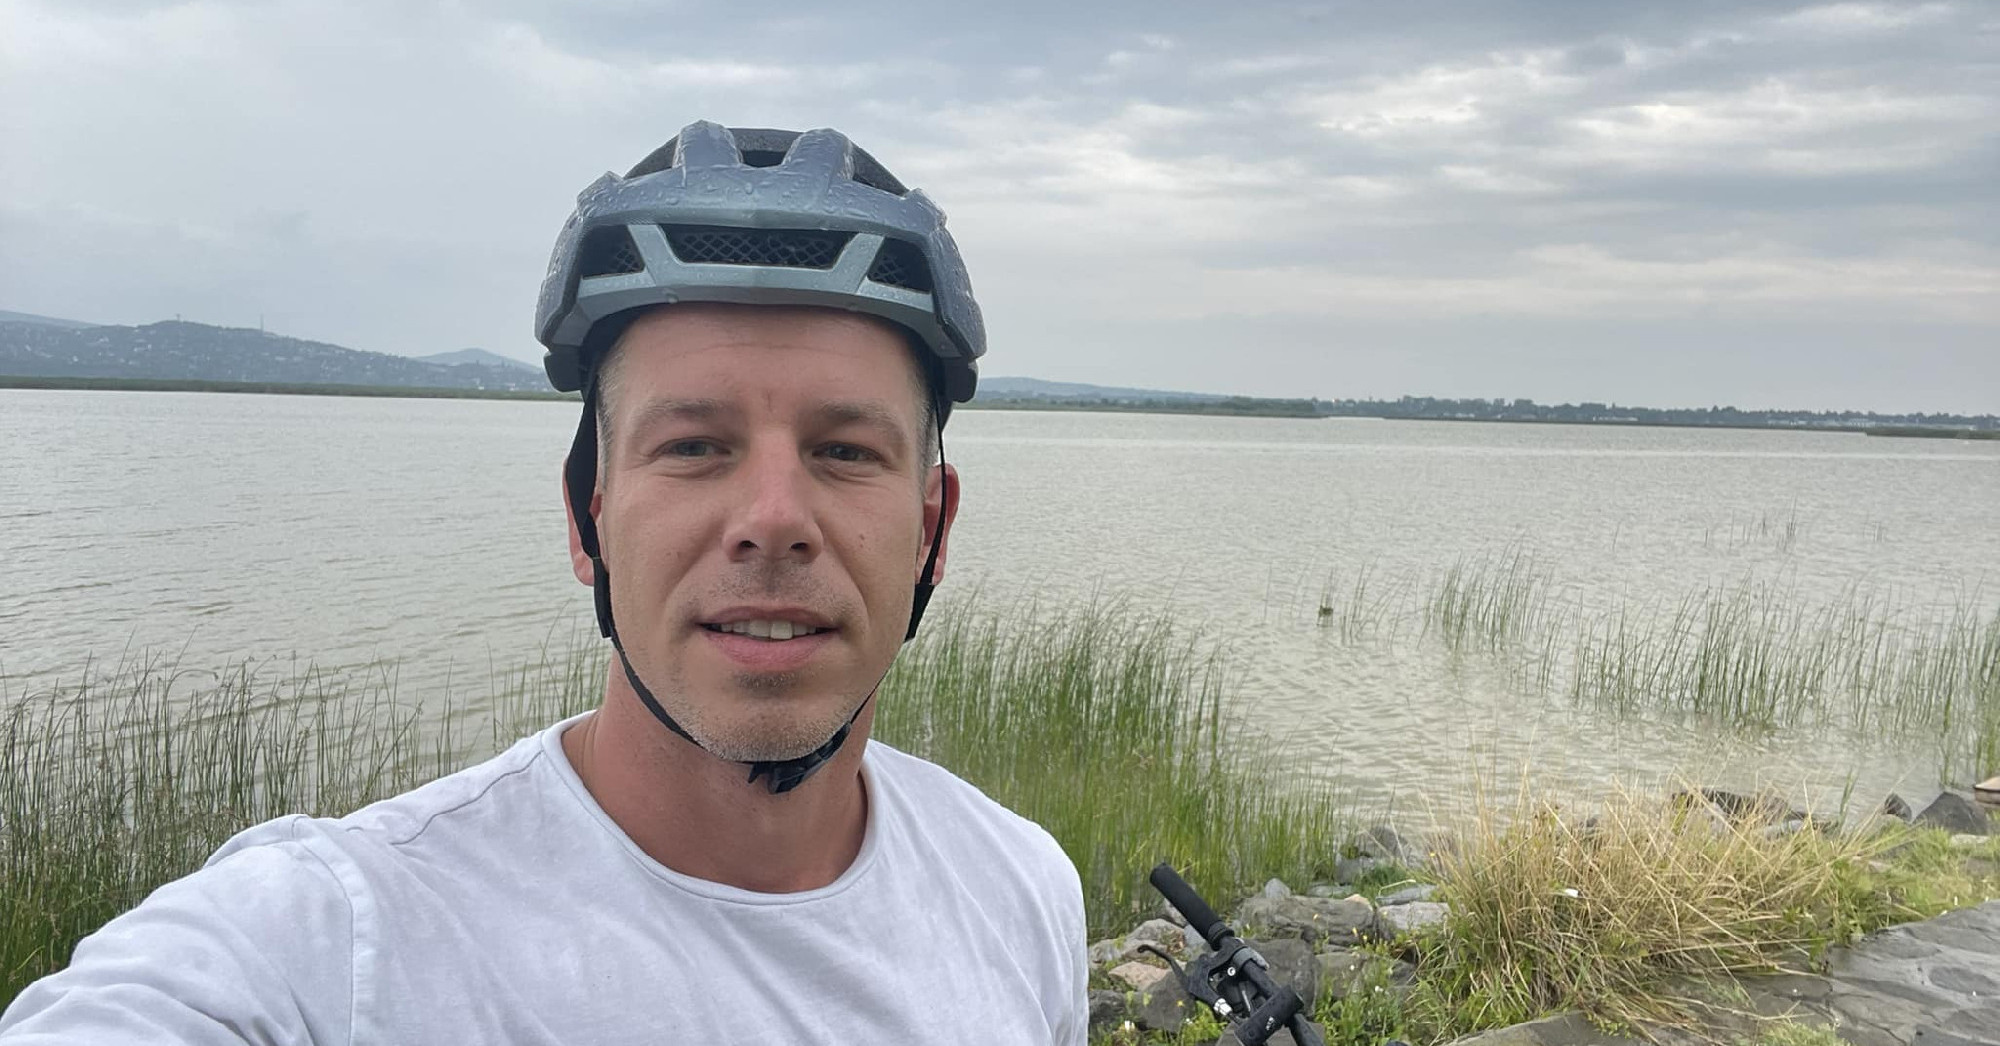 Magyar Péter balatonparti biciklizést hirdetett hétfőre